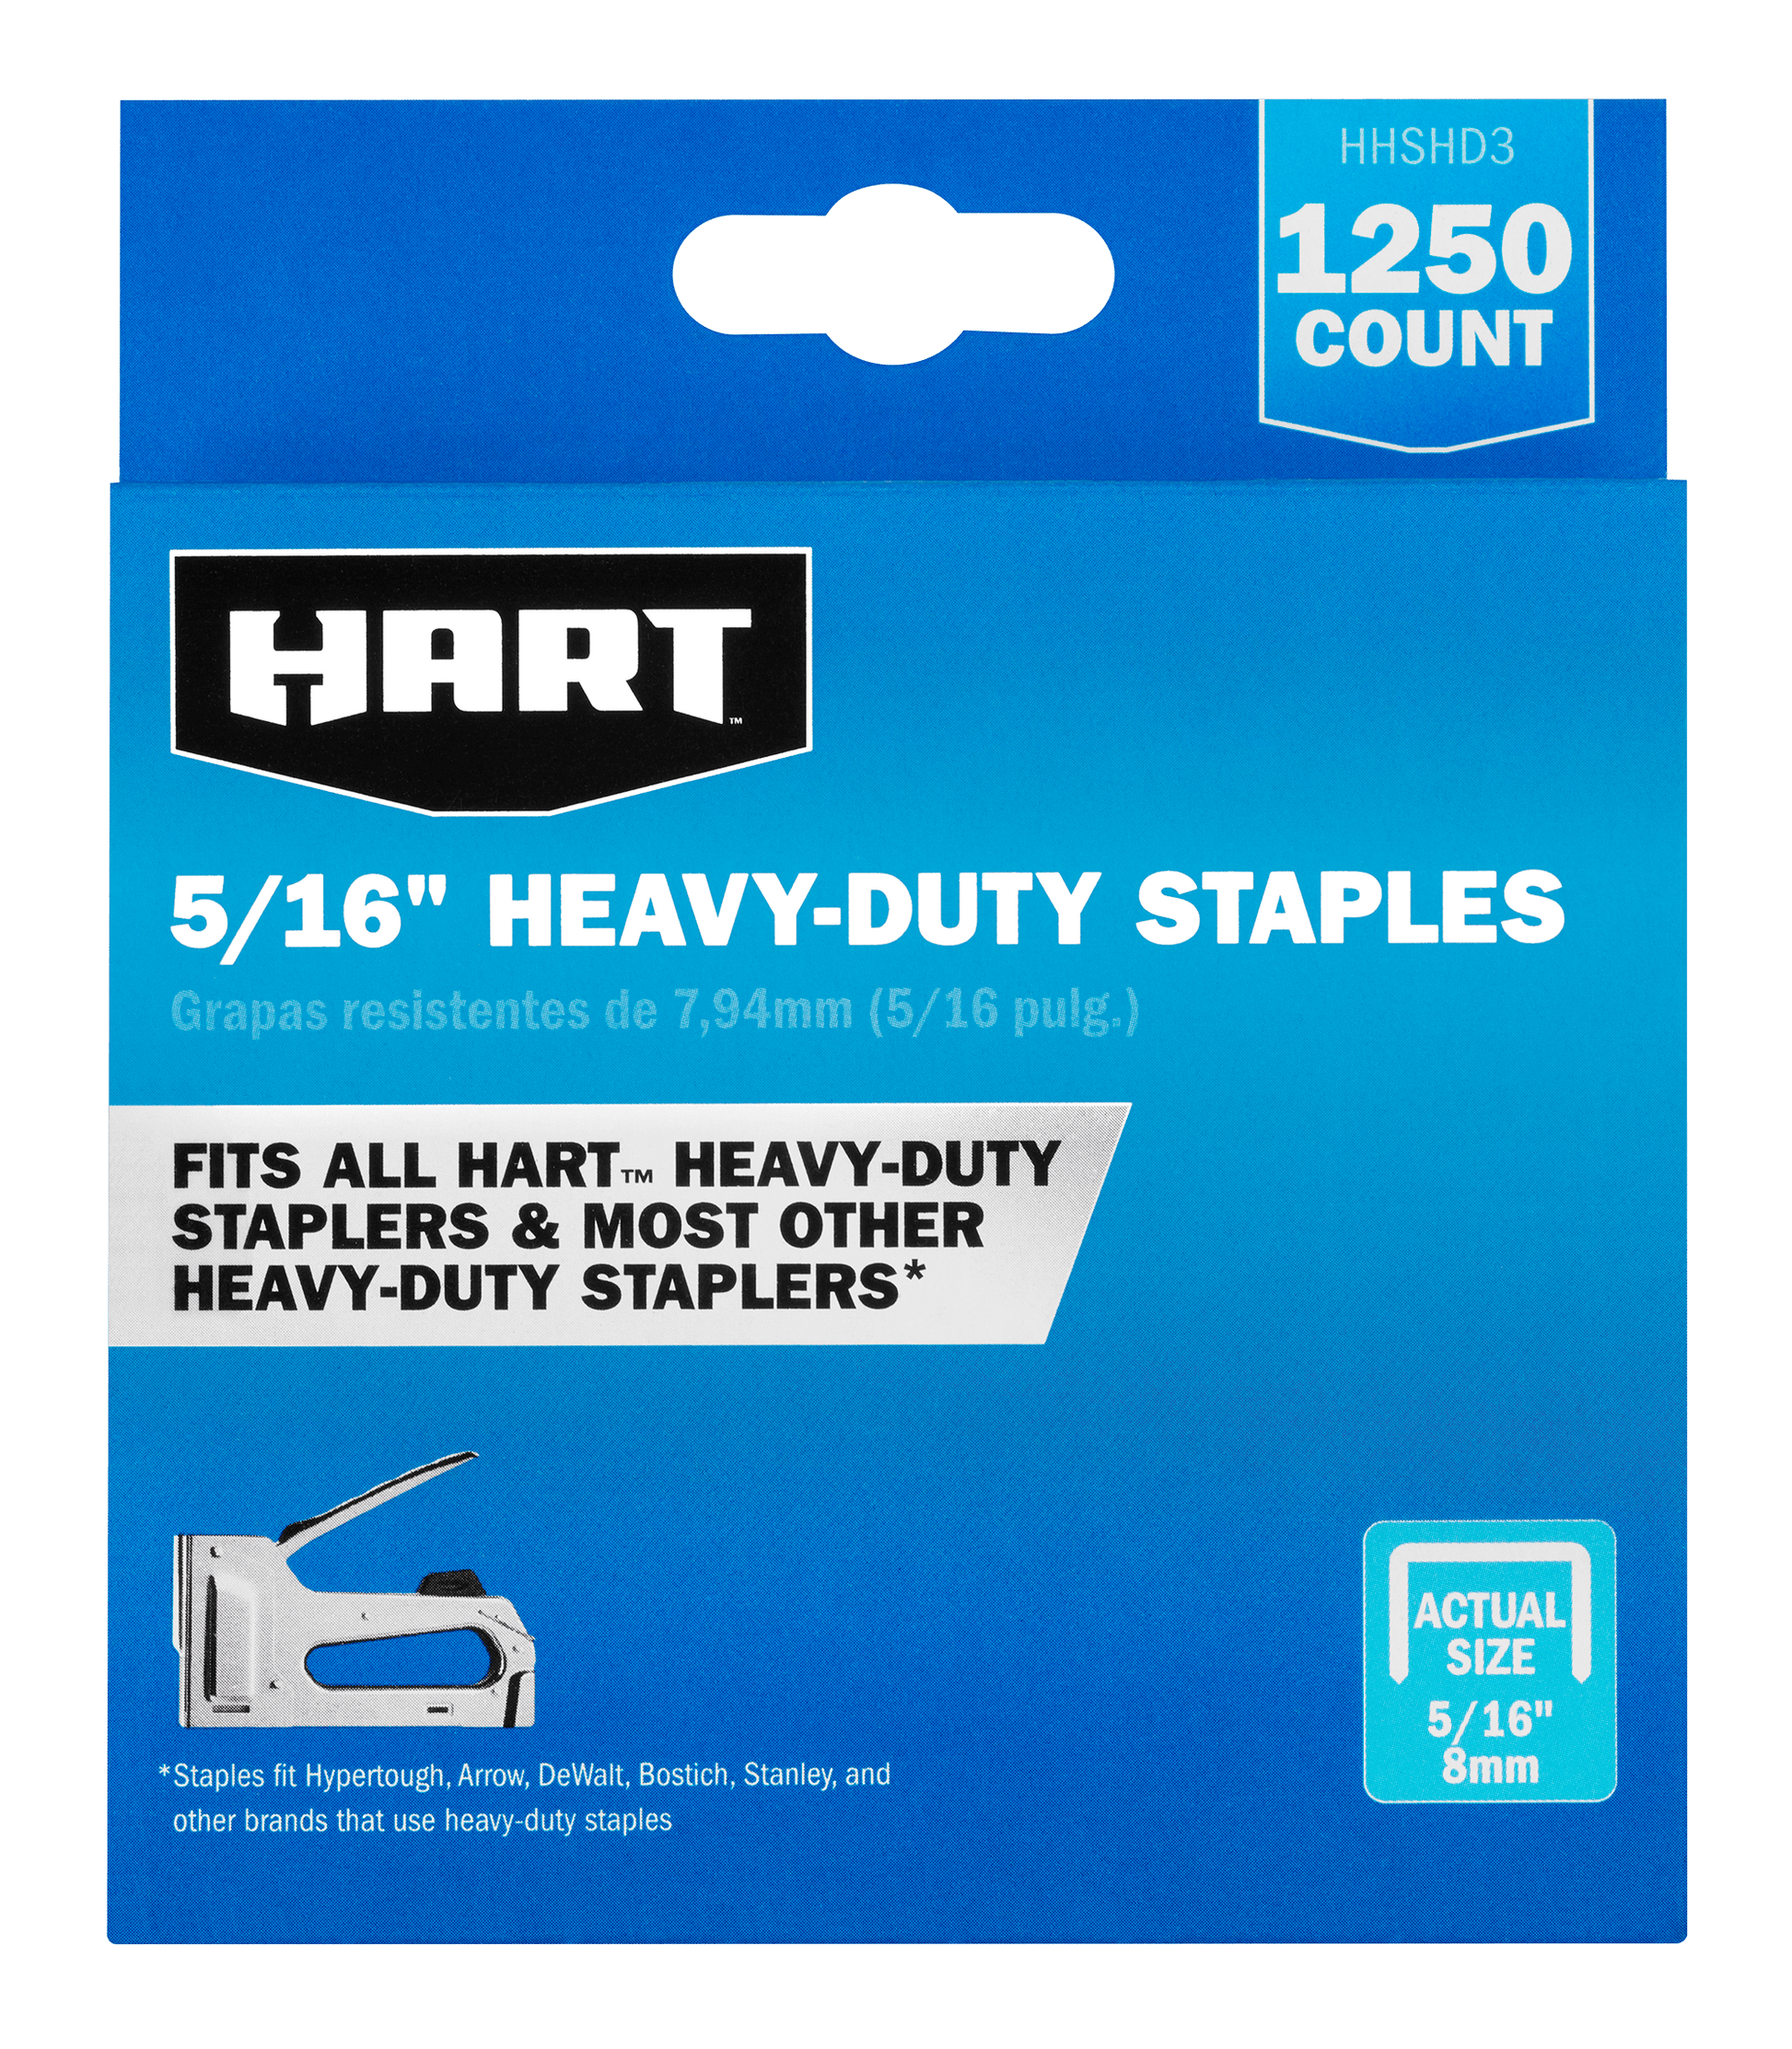 5/16" Heavy-Duty Staples